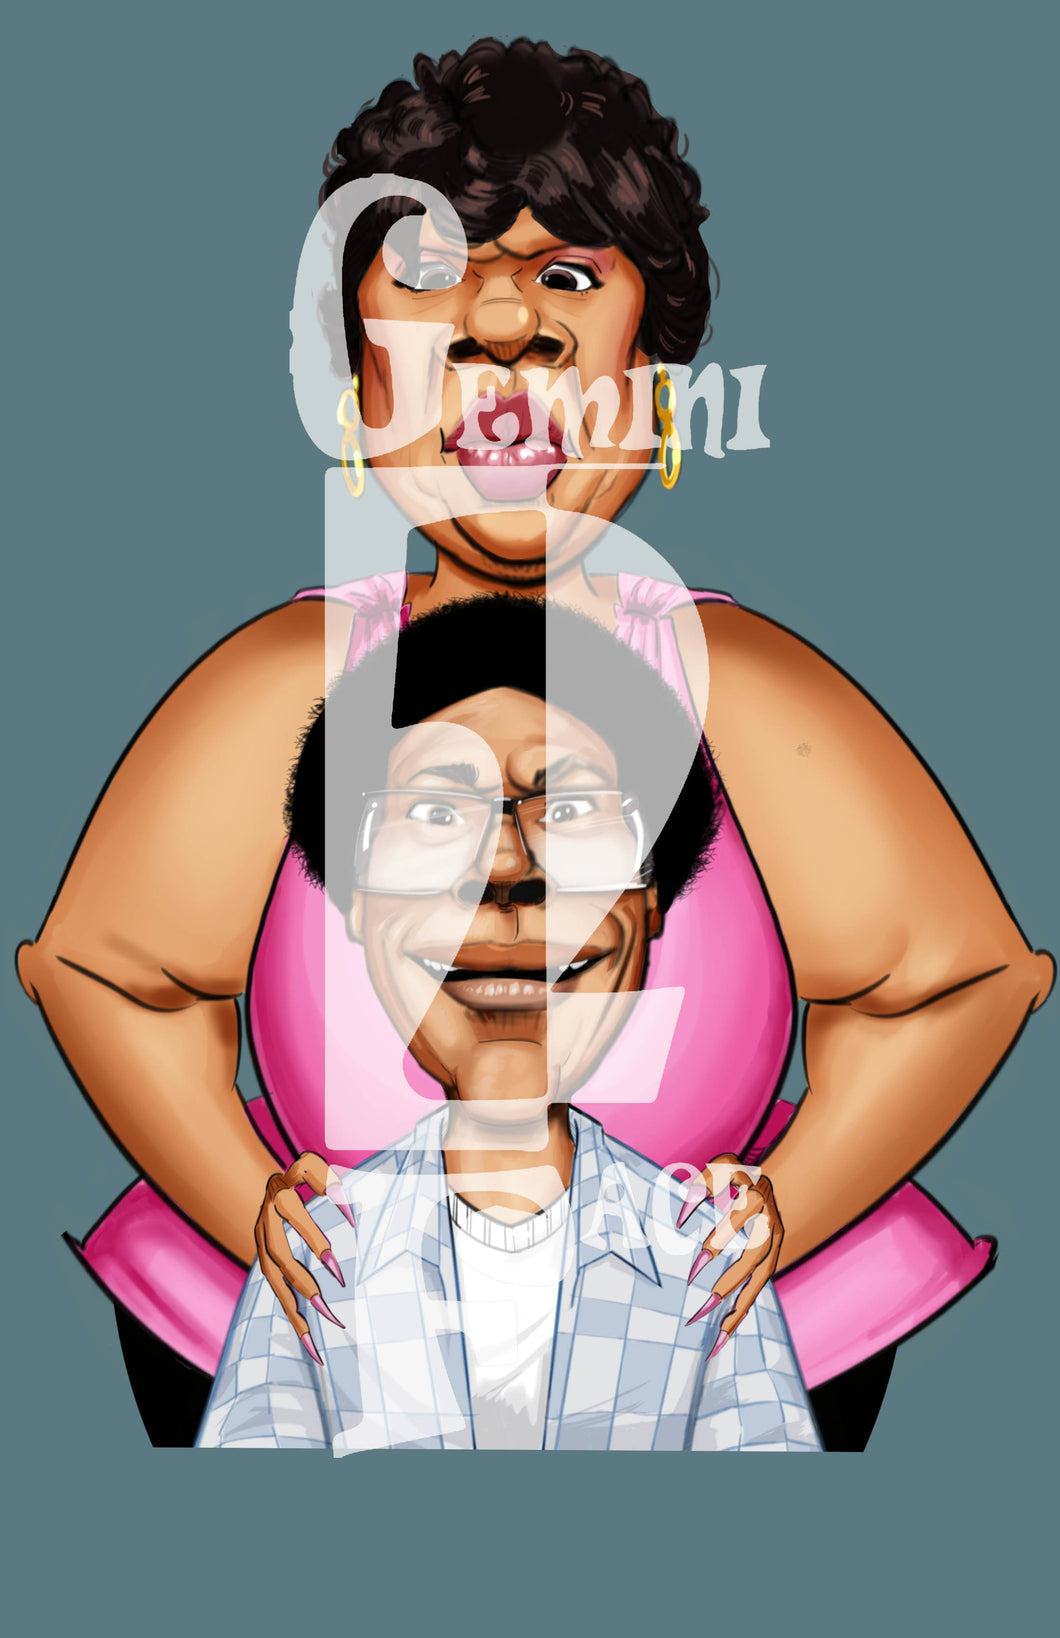 Norbit w/o background PNG PNG File Gemini2face Art E-Store 